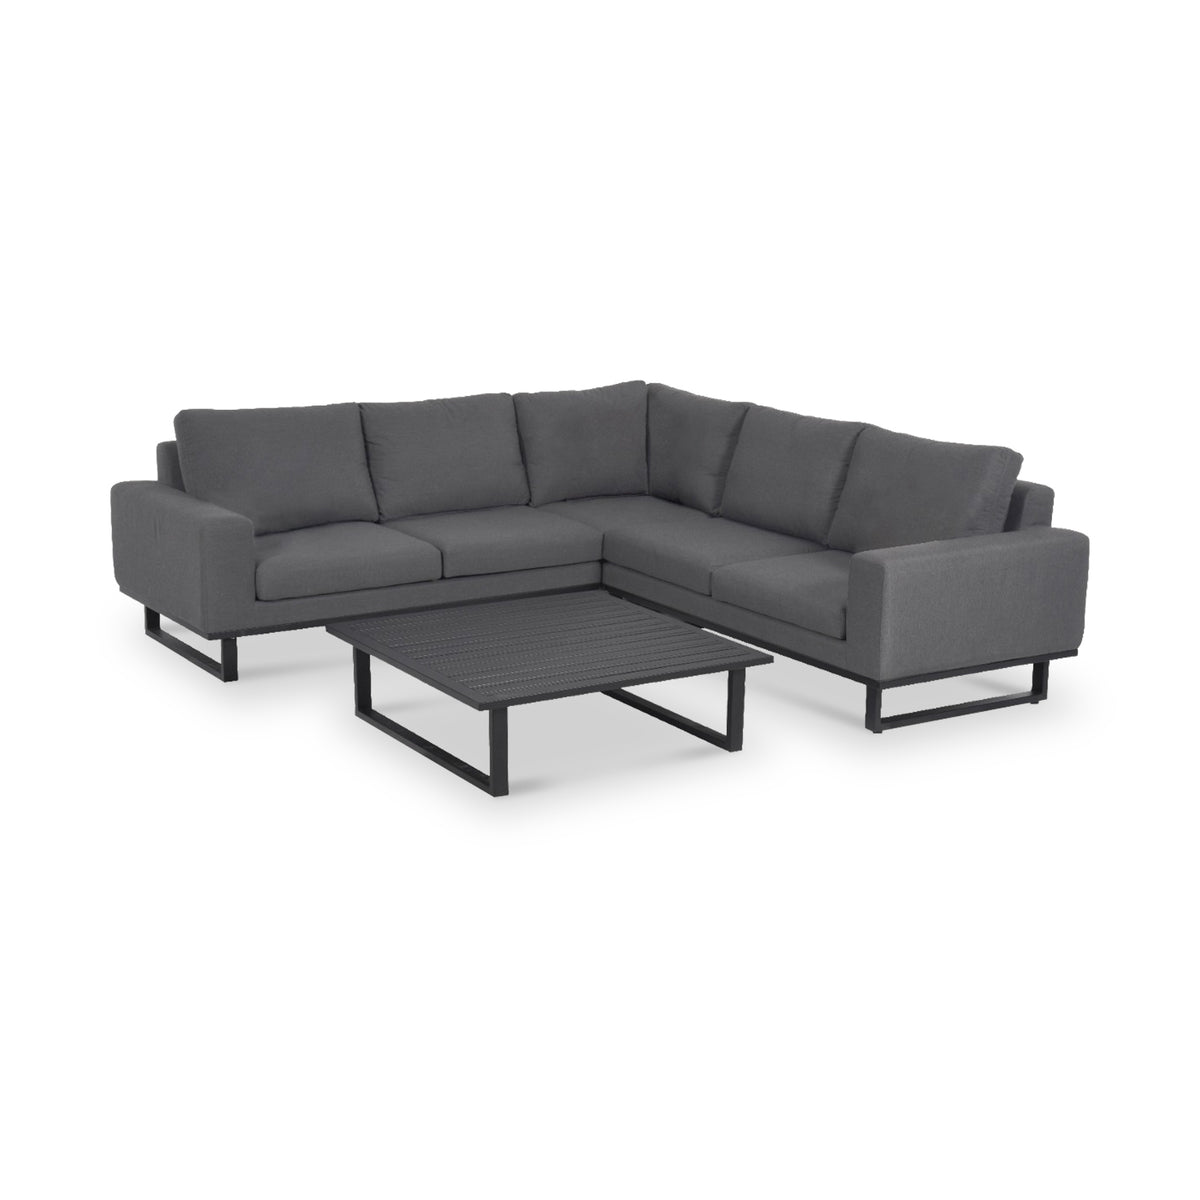 Maze Ethos Flanelle Grey Outdoor Corner Sofa Group from Roseland Furniture